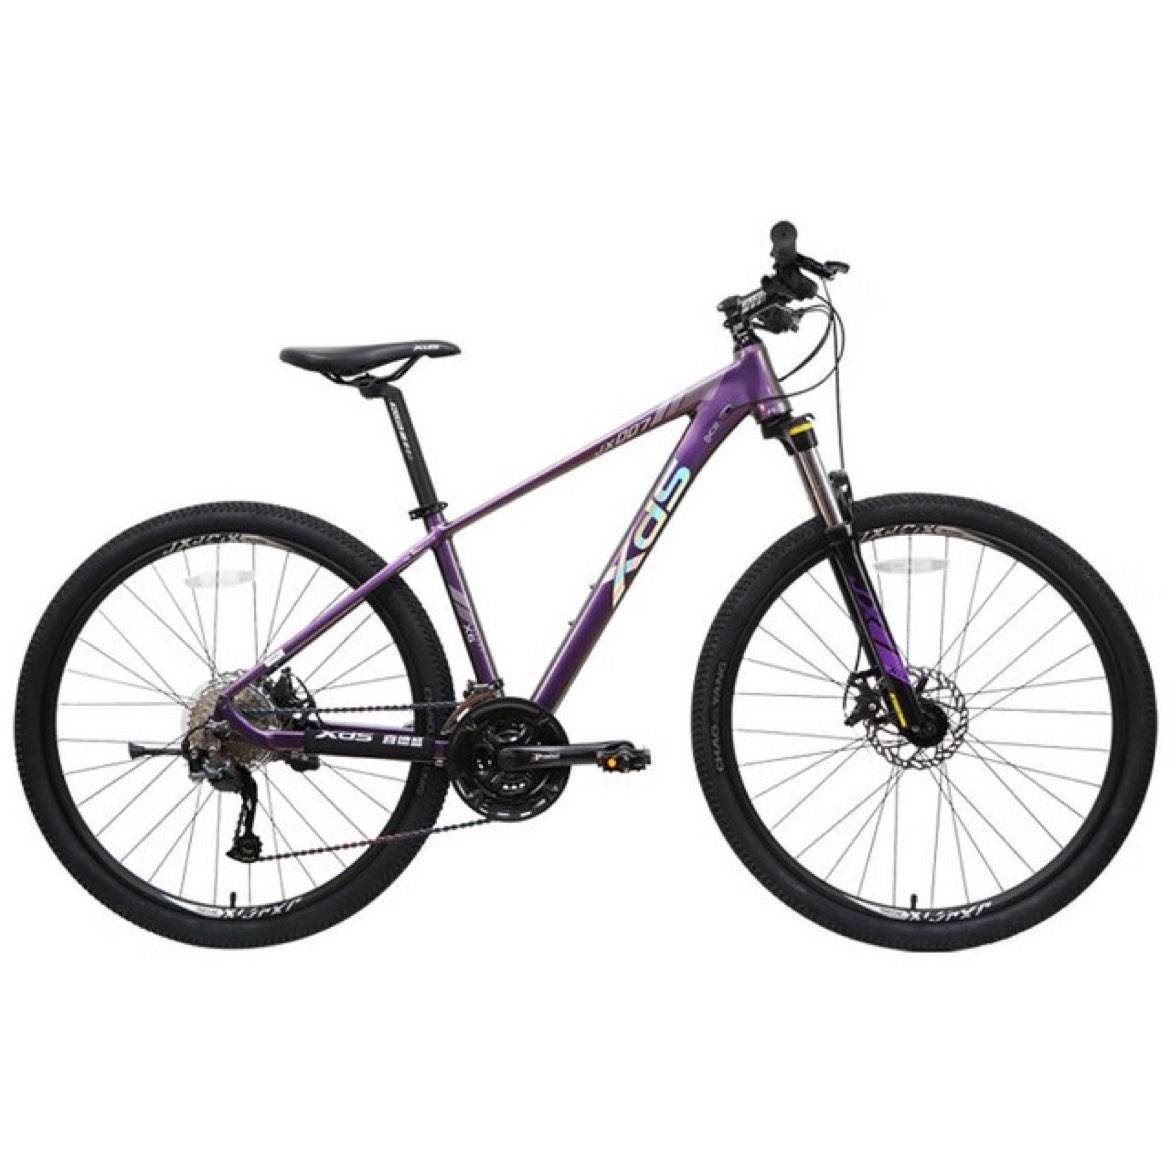 XDS 喜德盛 山地自行车JX007铝合金车架27速碟刹单车幻彩紫17英寸 1184.76元包邮